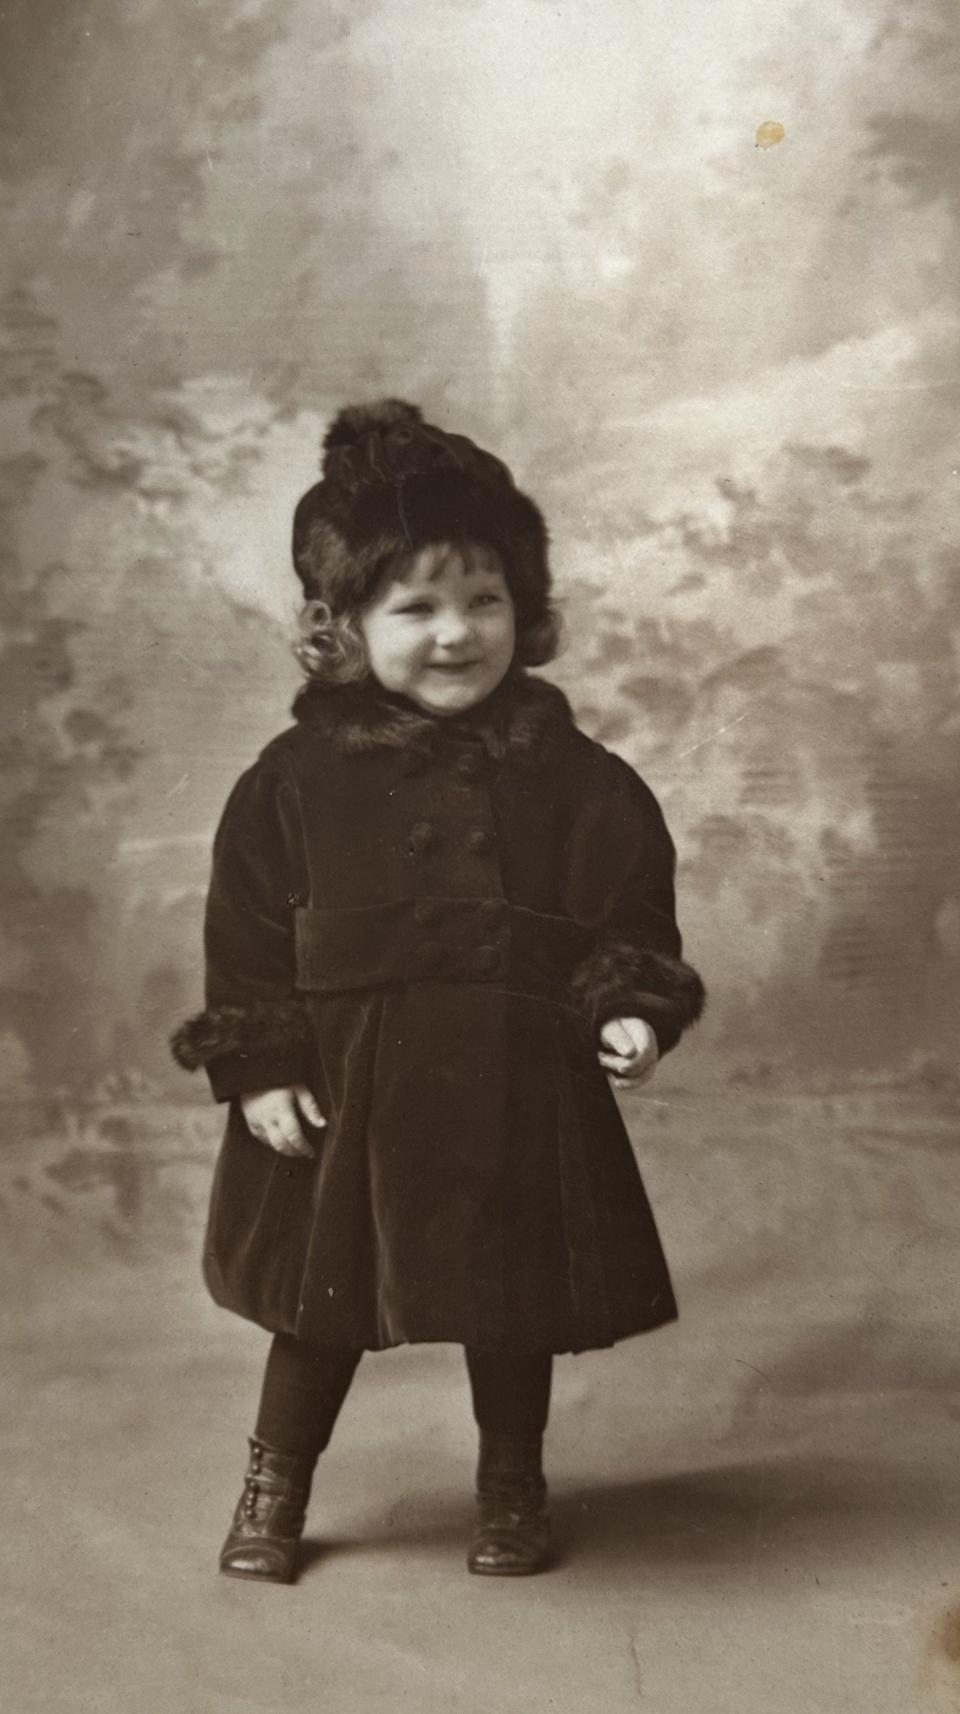 Bobbie West, at age 2, in Binghamton, N.Y. "My first fur coat," she says.